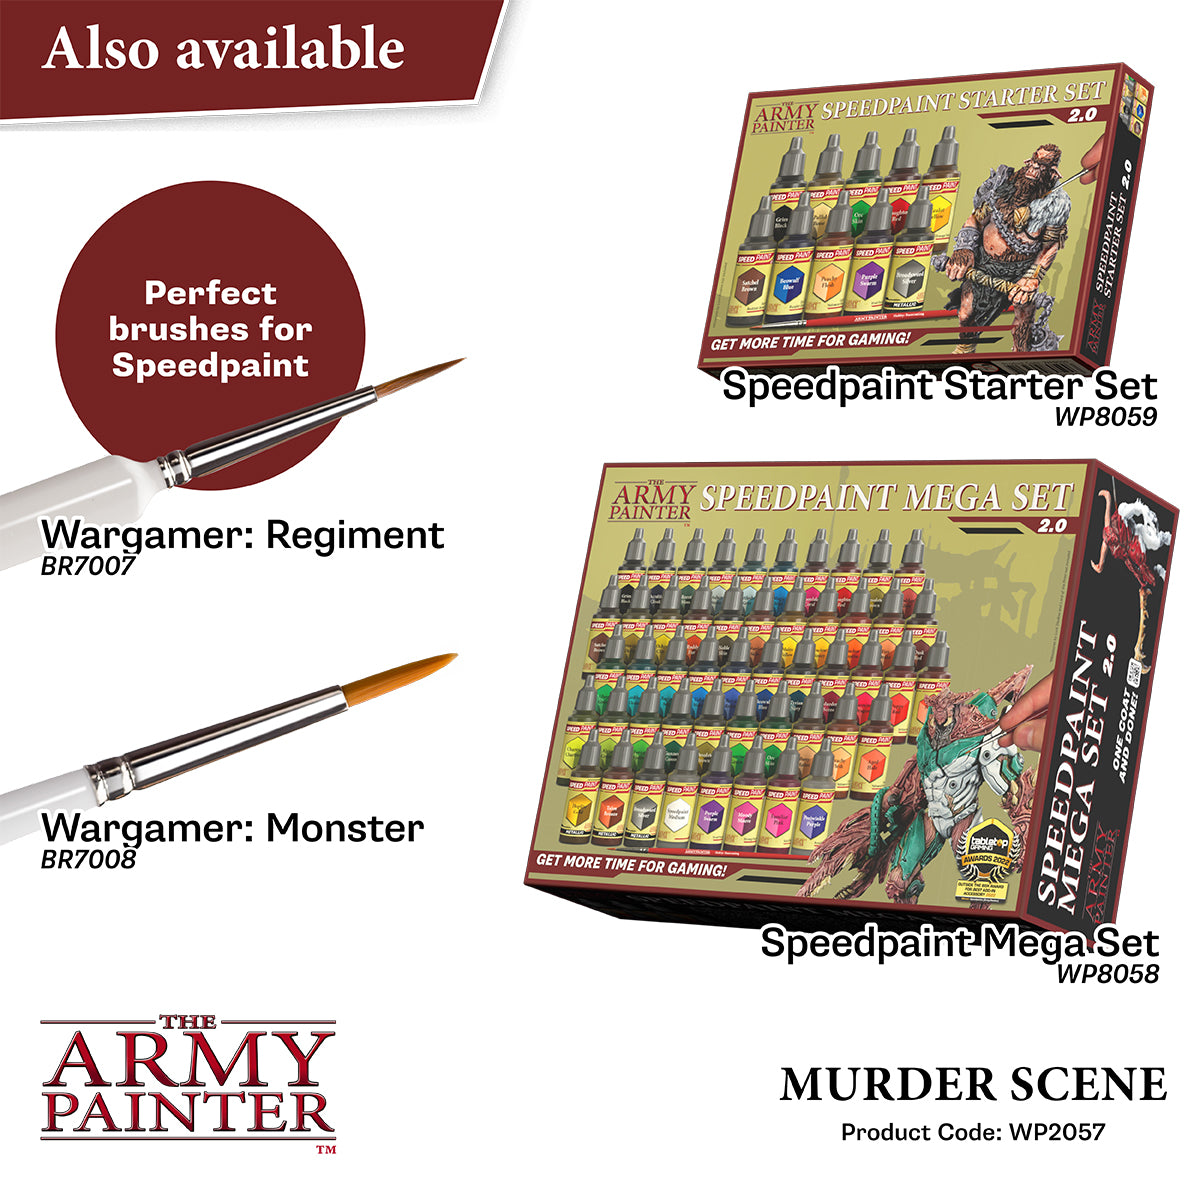 Army Painter Speedpaint Mega Set 2.0 Review - FauxHammer